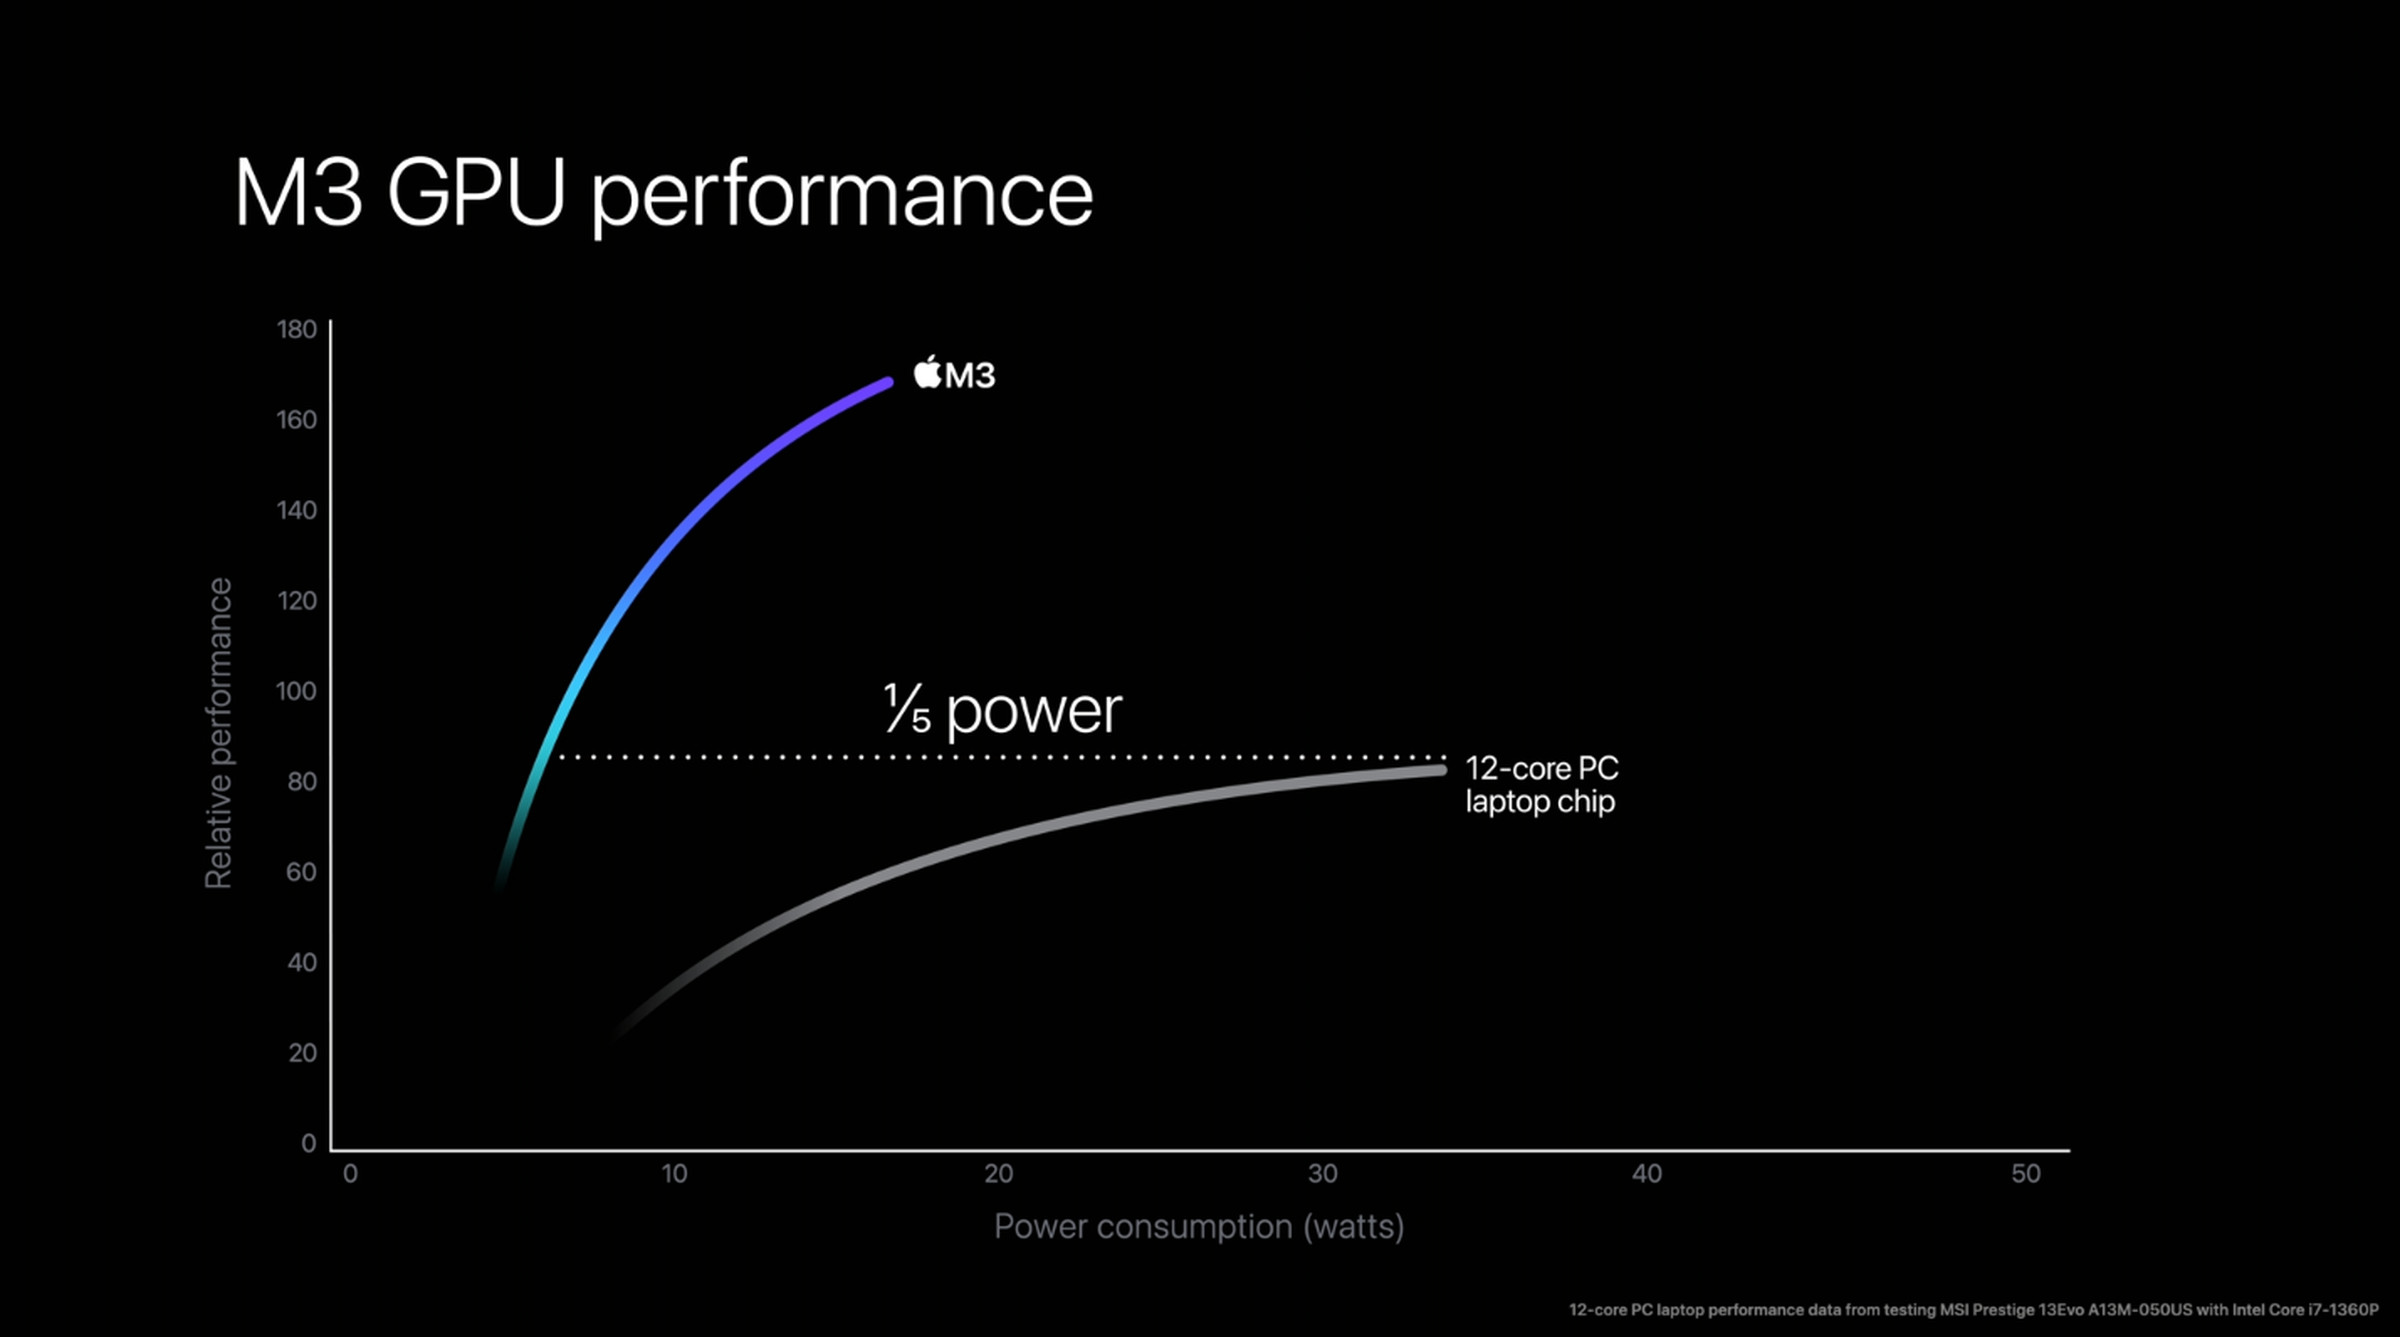 Apple’s M3 GPU power consumption compared to Intel’s Core i7 1360P.